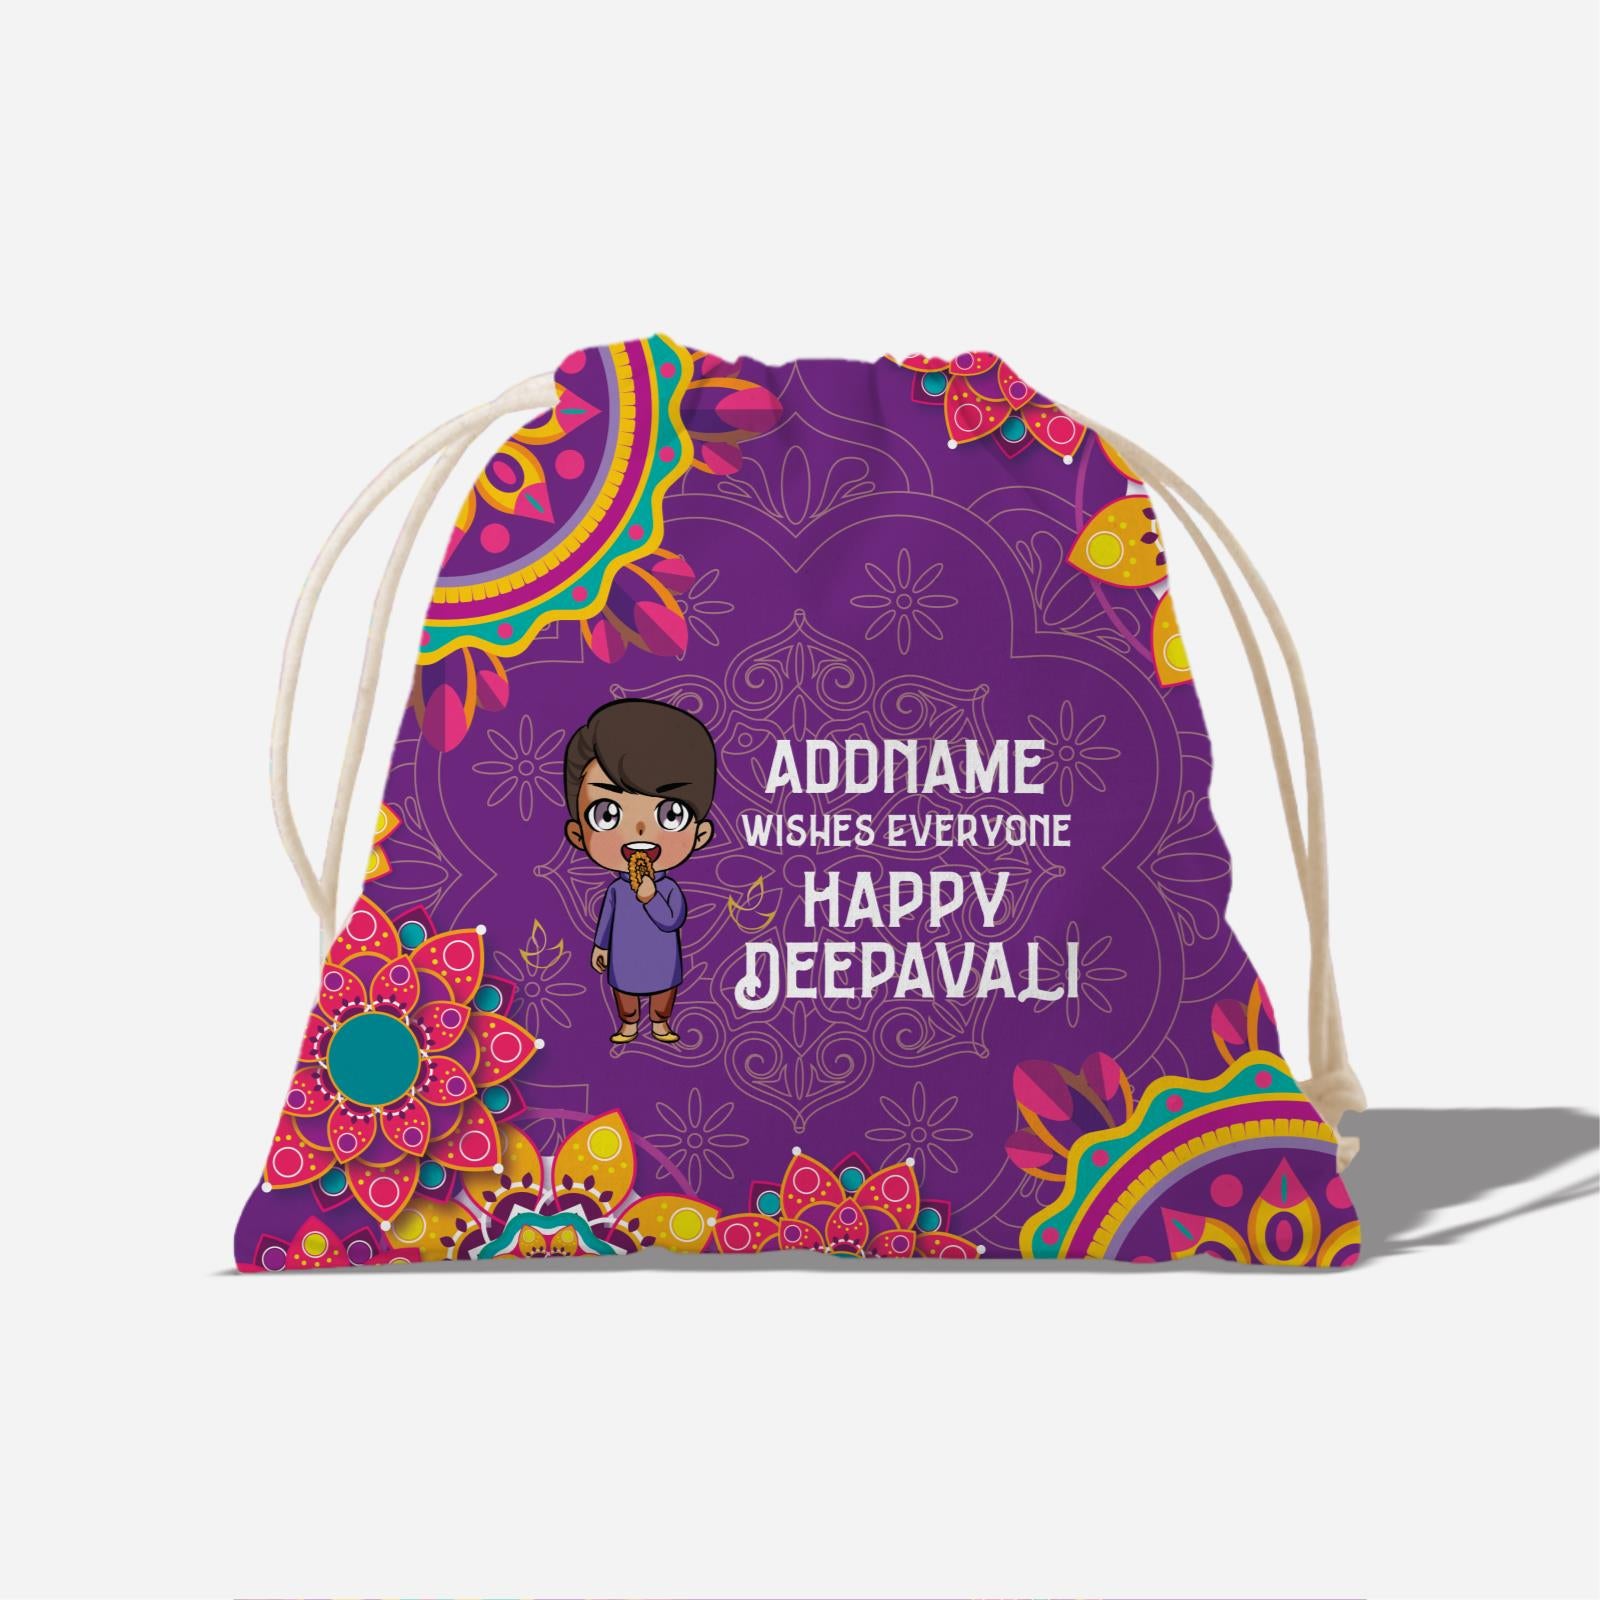 Deepavali Chibi Full Print Satchel - Little Boy Front Addname Wishes Everyone Deepavali